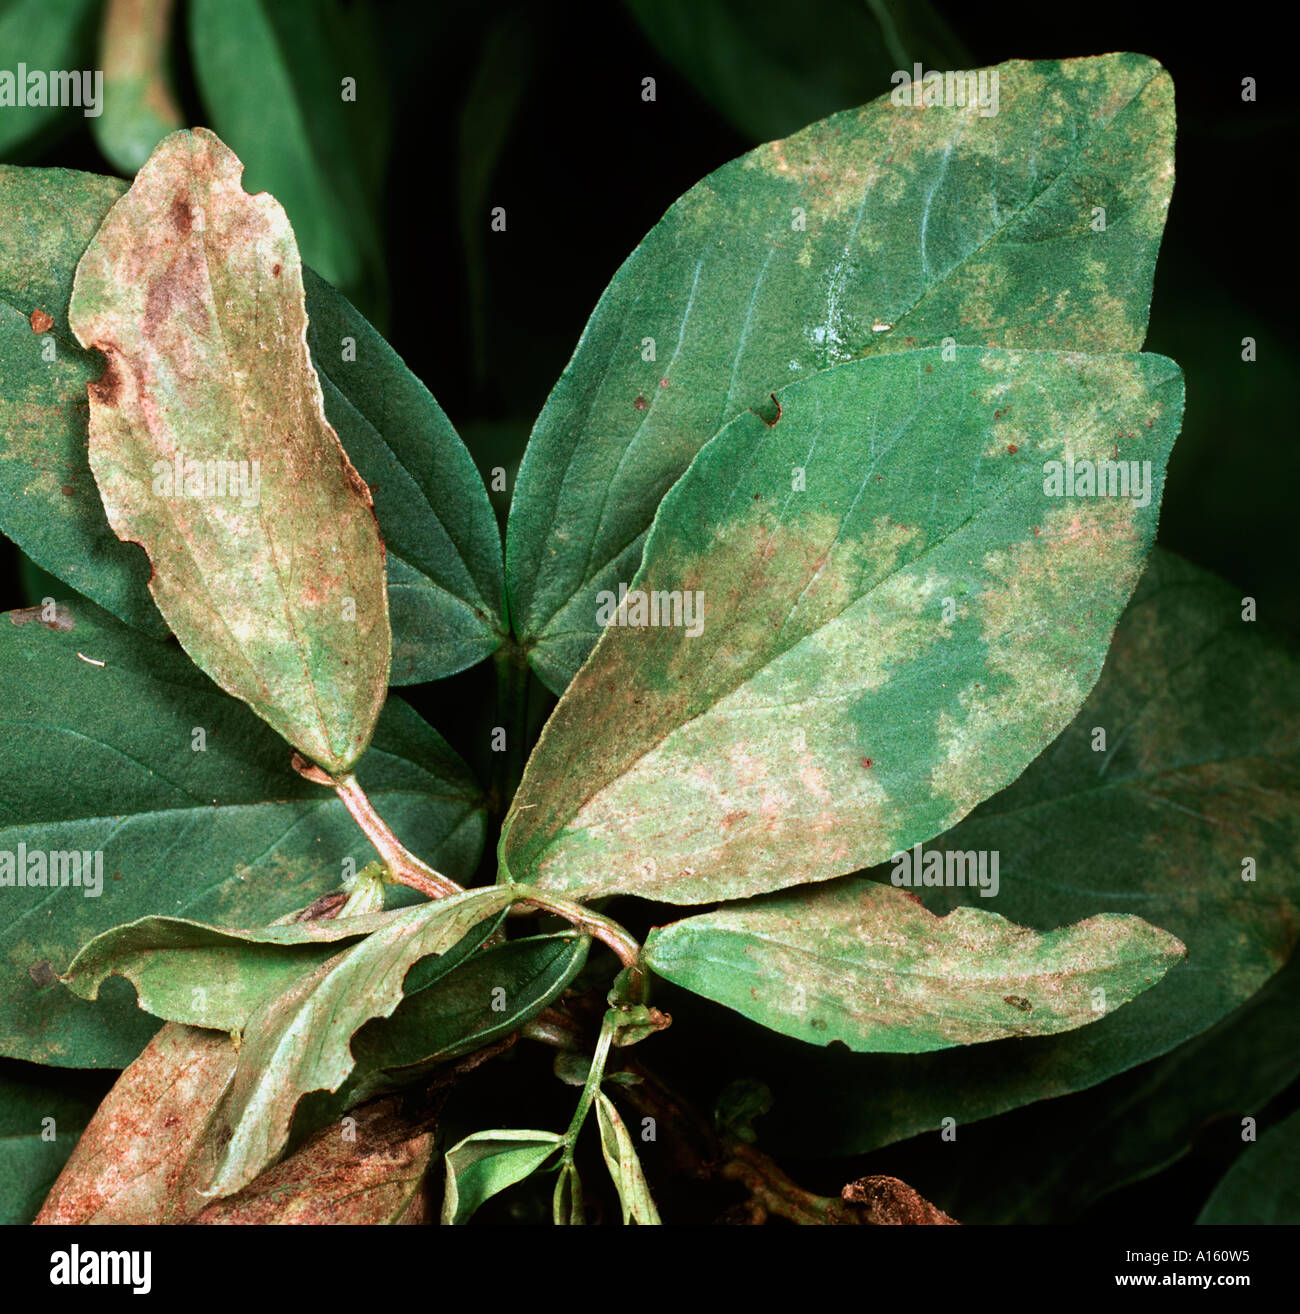 Downy mildew Peronospora viciae lesions on field bean leaves Stock Photo